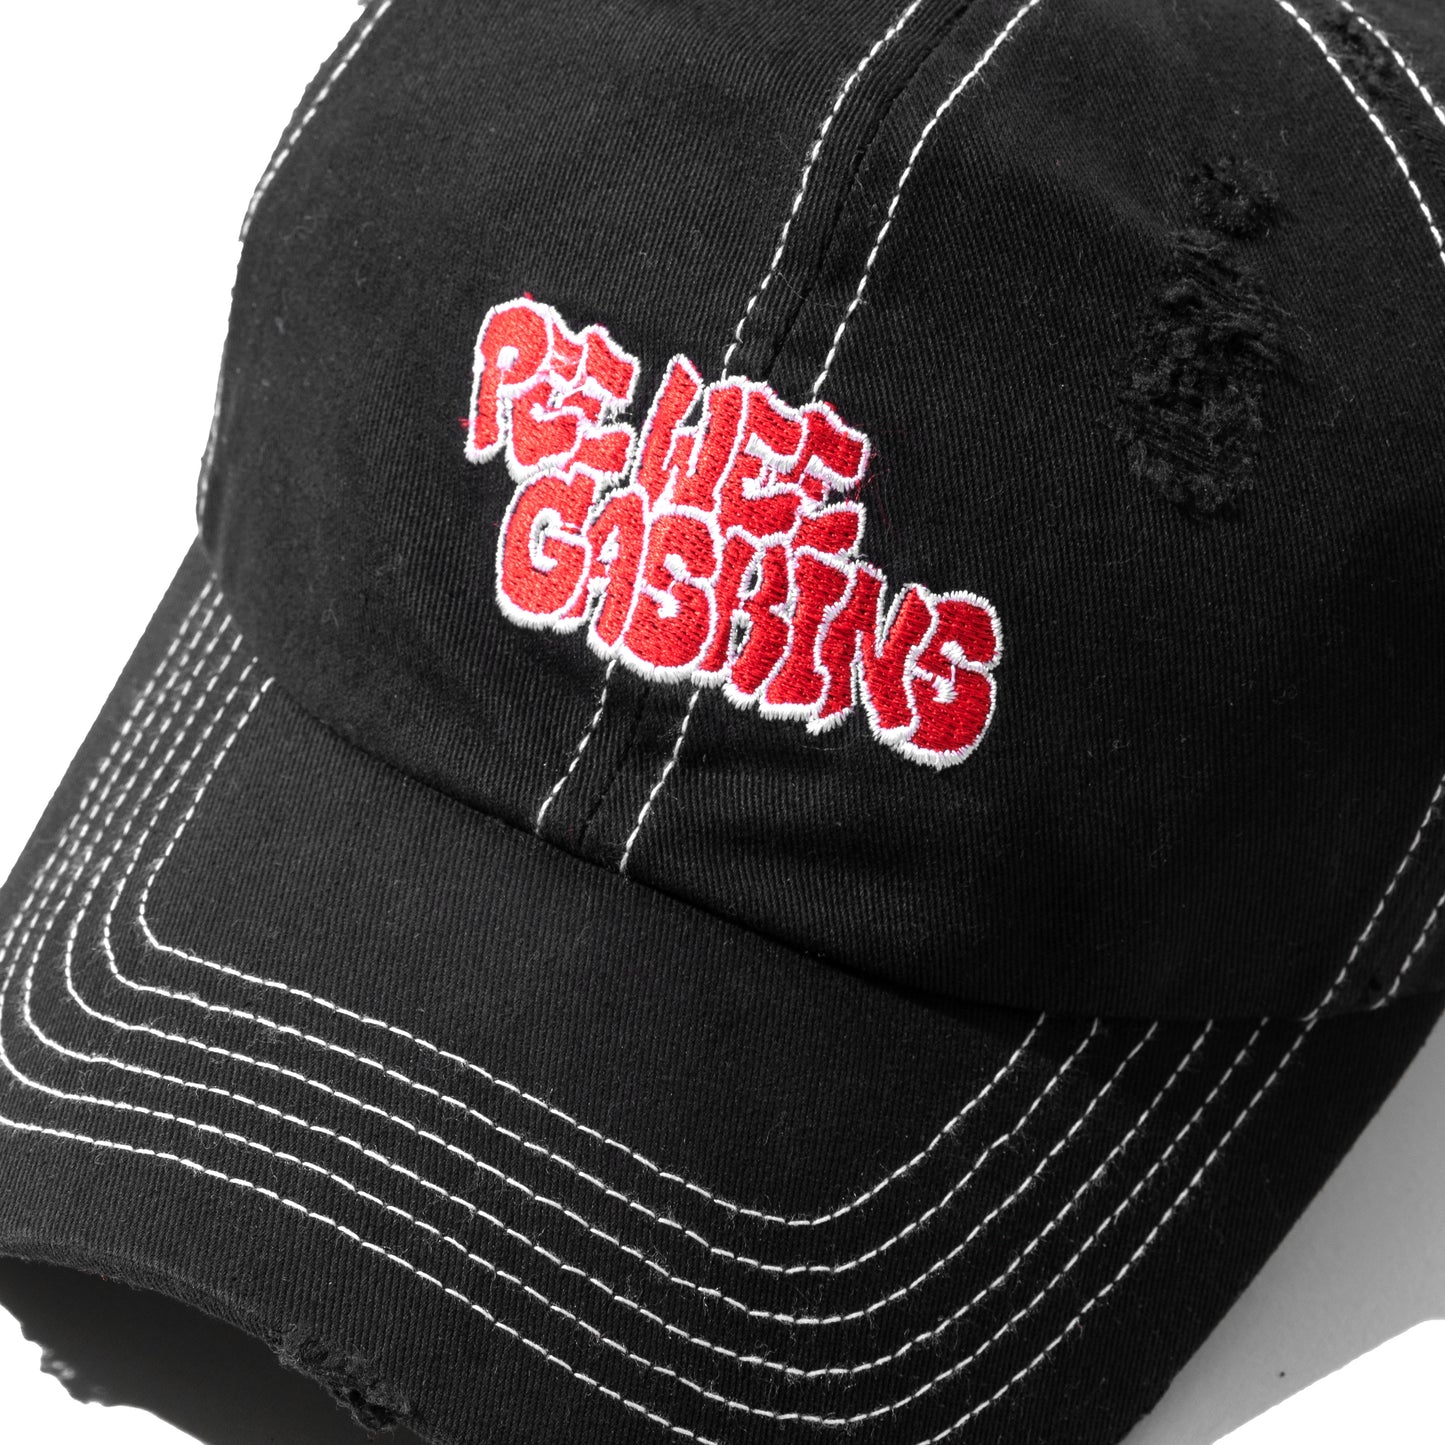 PWG Stitches Caps